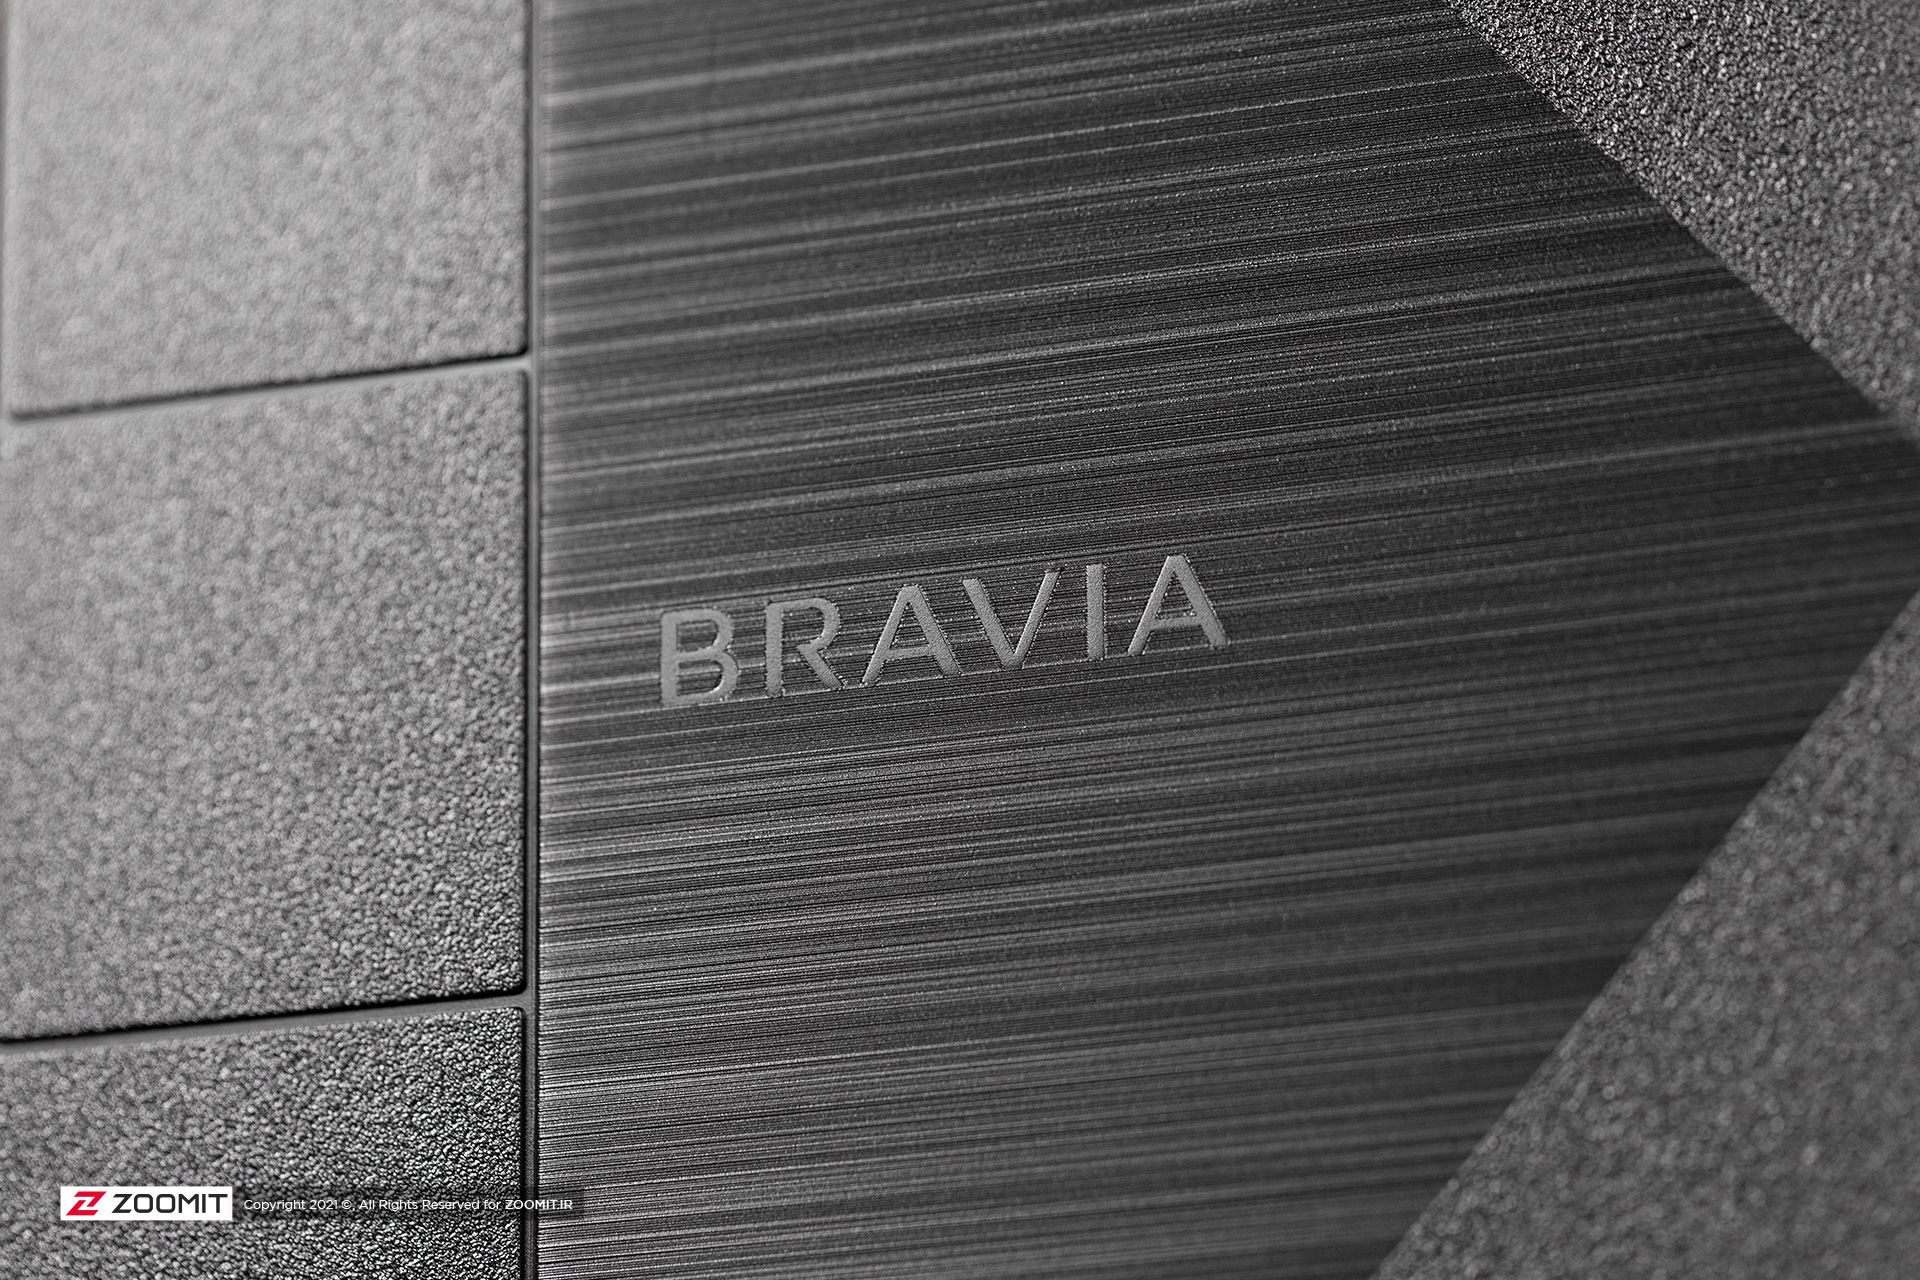 لوگوی براویا در تلویزیون Bravia X90J سونی